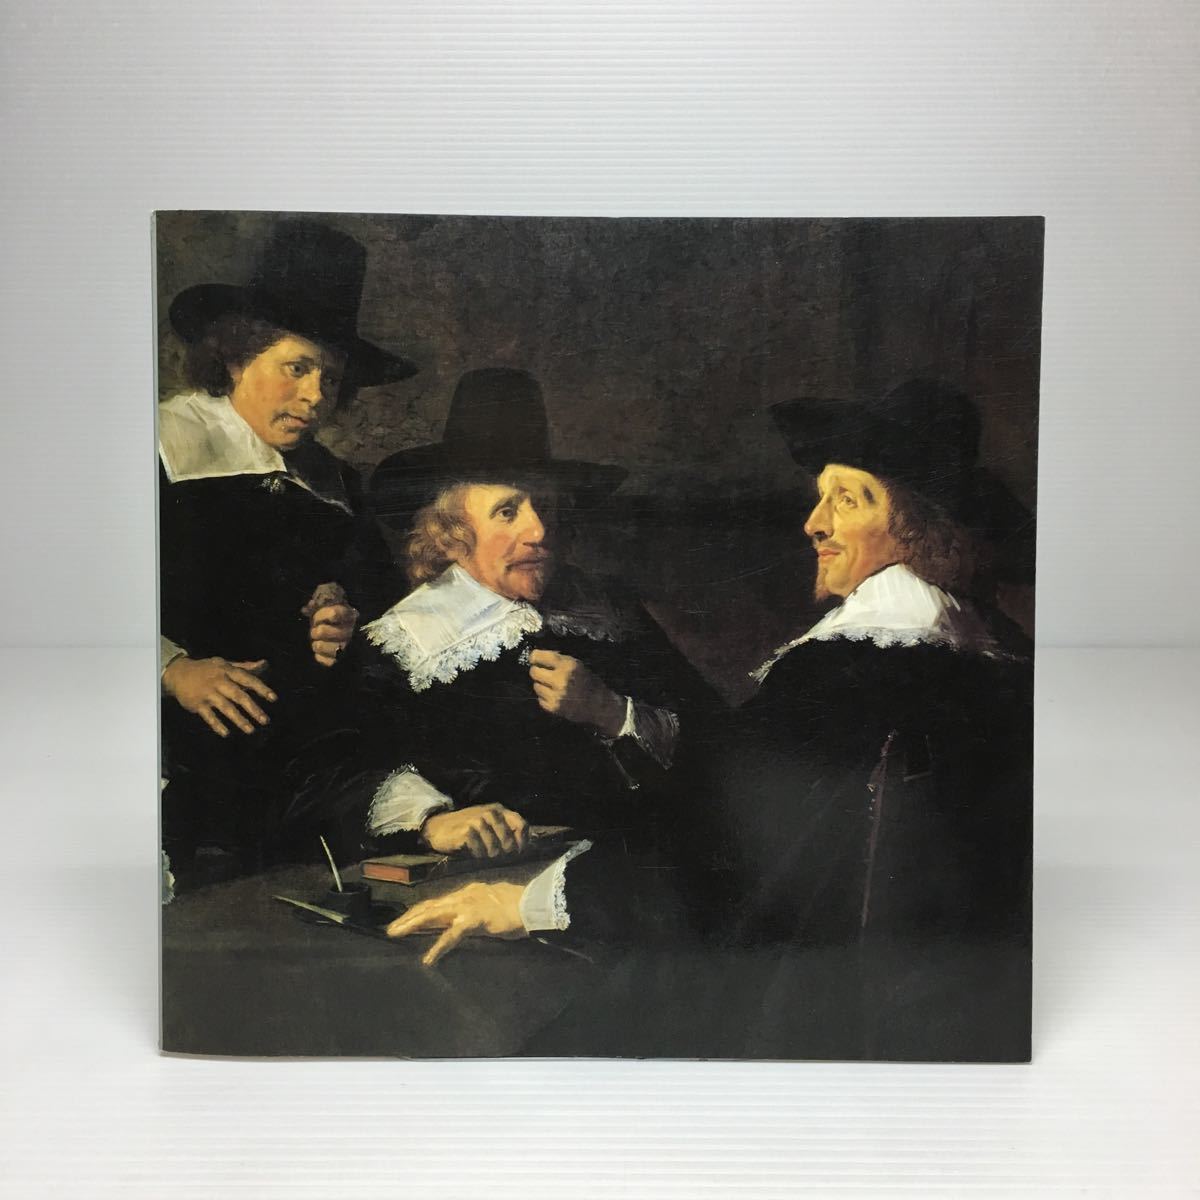 m2/フランス･ハルスと17世紀オランダ絵画の黄金比 FRANS HALS & HAARLEM PAINTERS 1988, 絵画, 画集, 作品集, 図録